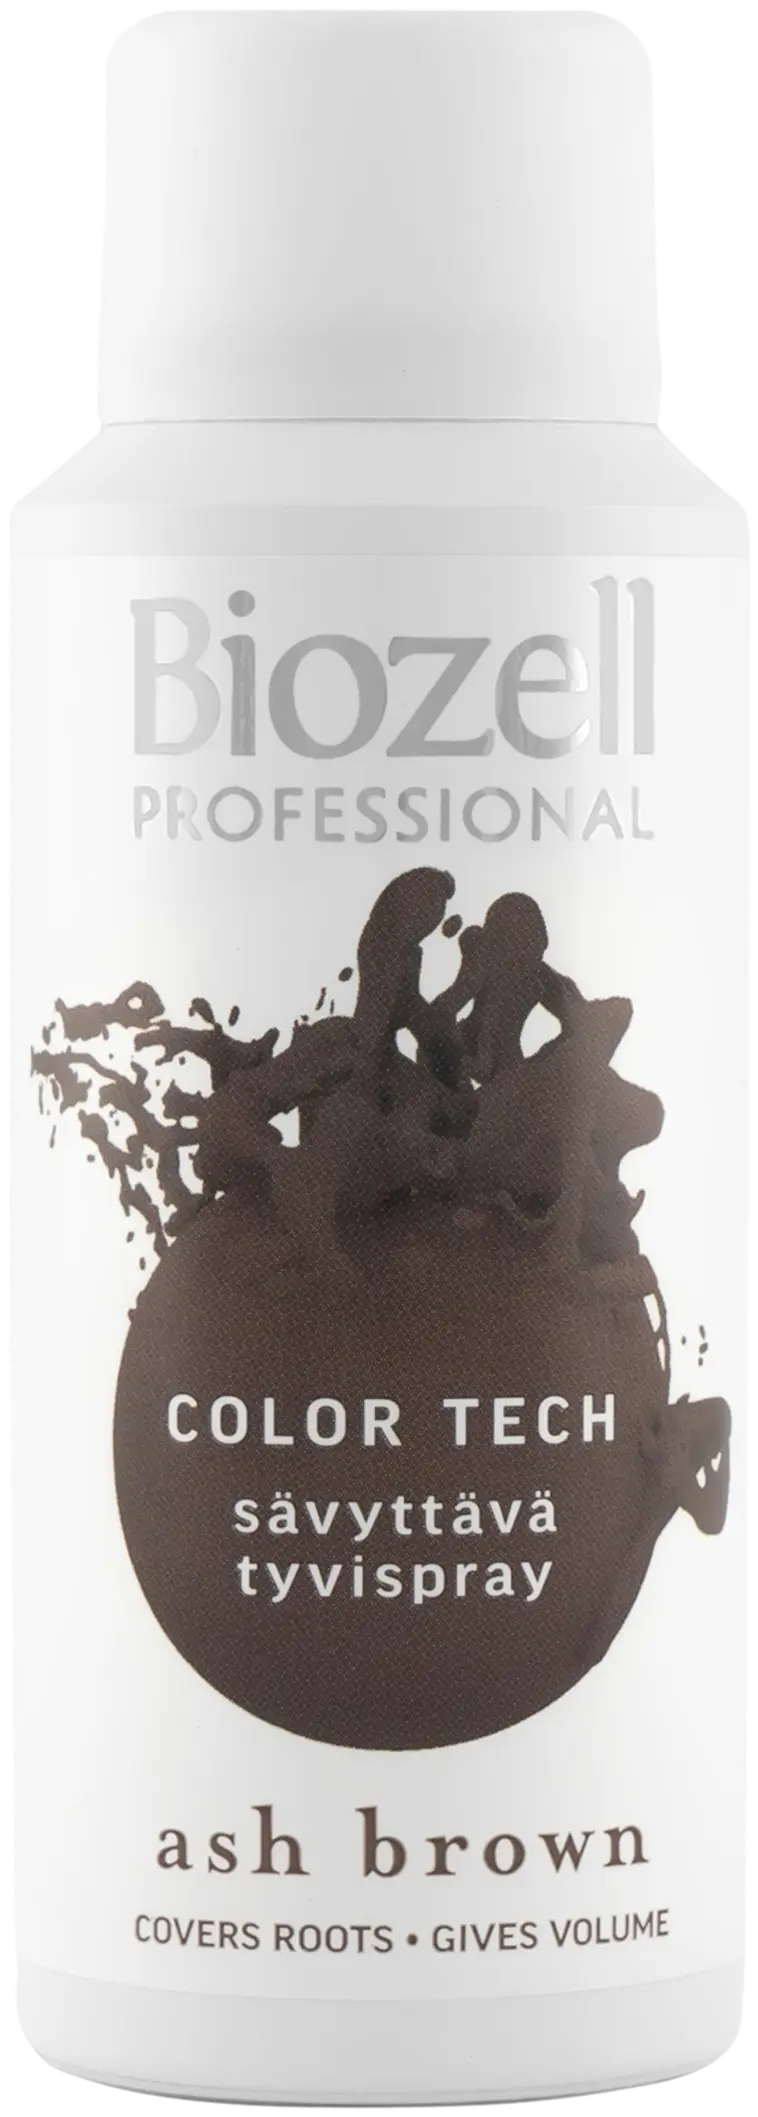 Biozell Professional Color Tech Sävyttävä tyvispray Ash Brown 100ml